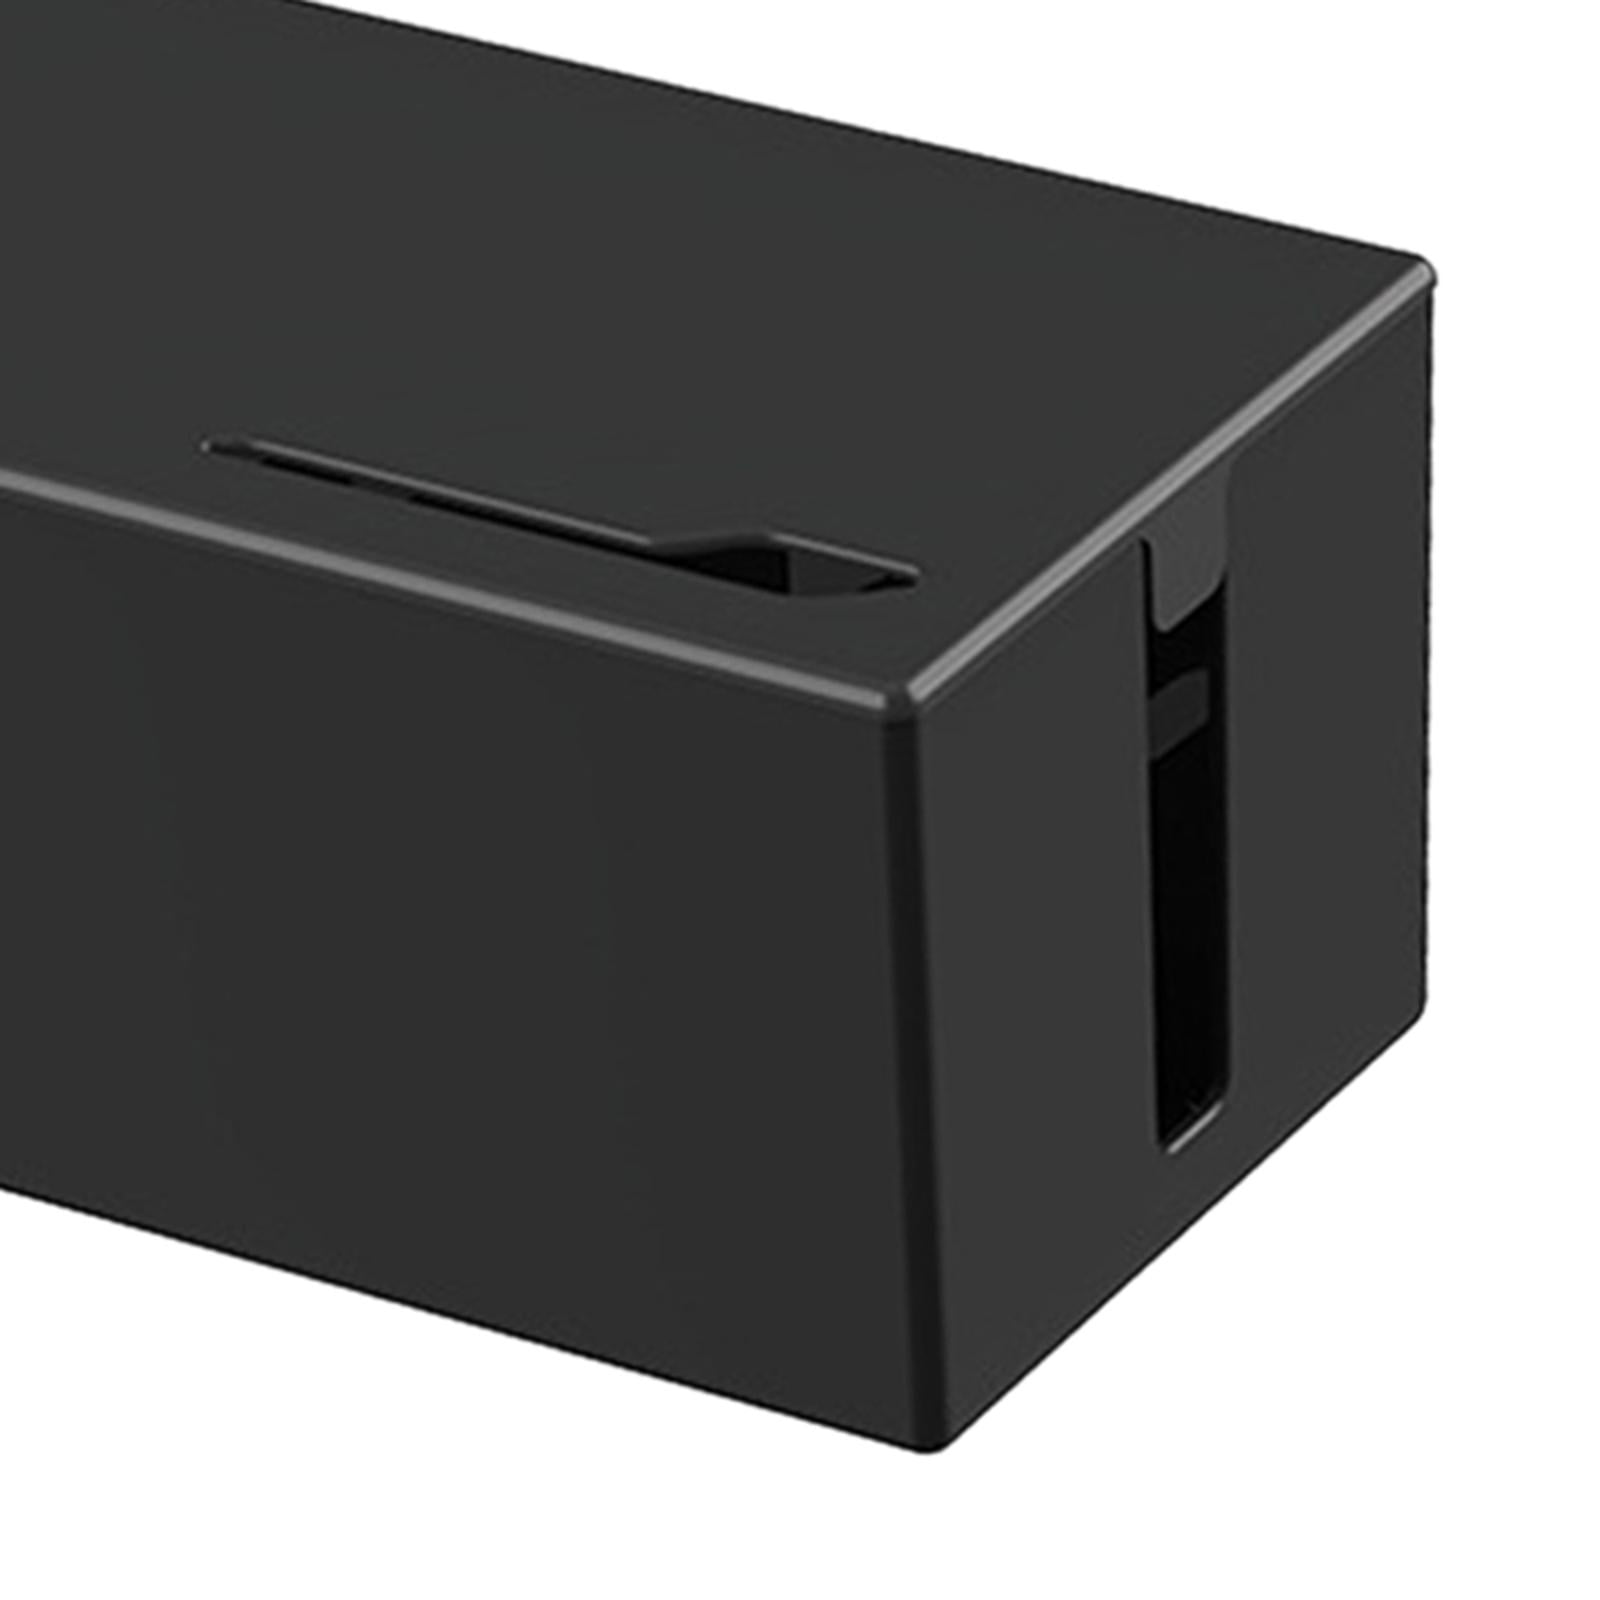 1pcs Charge Cable Organizer Box Cable Management Box Desk Cord Sorter  Organizer